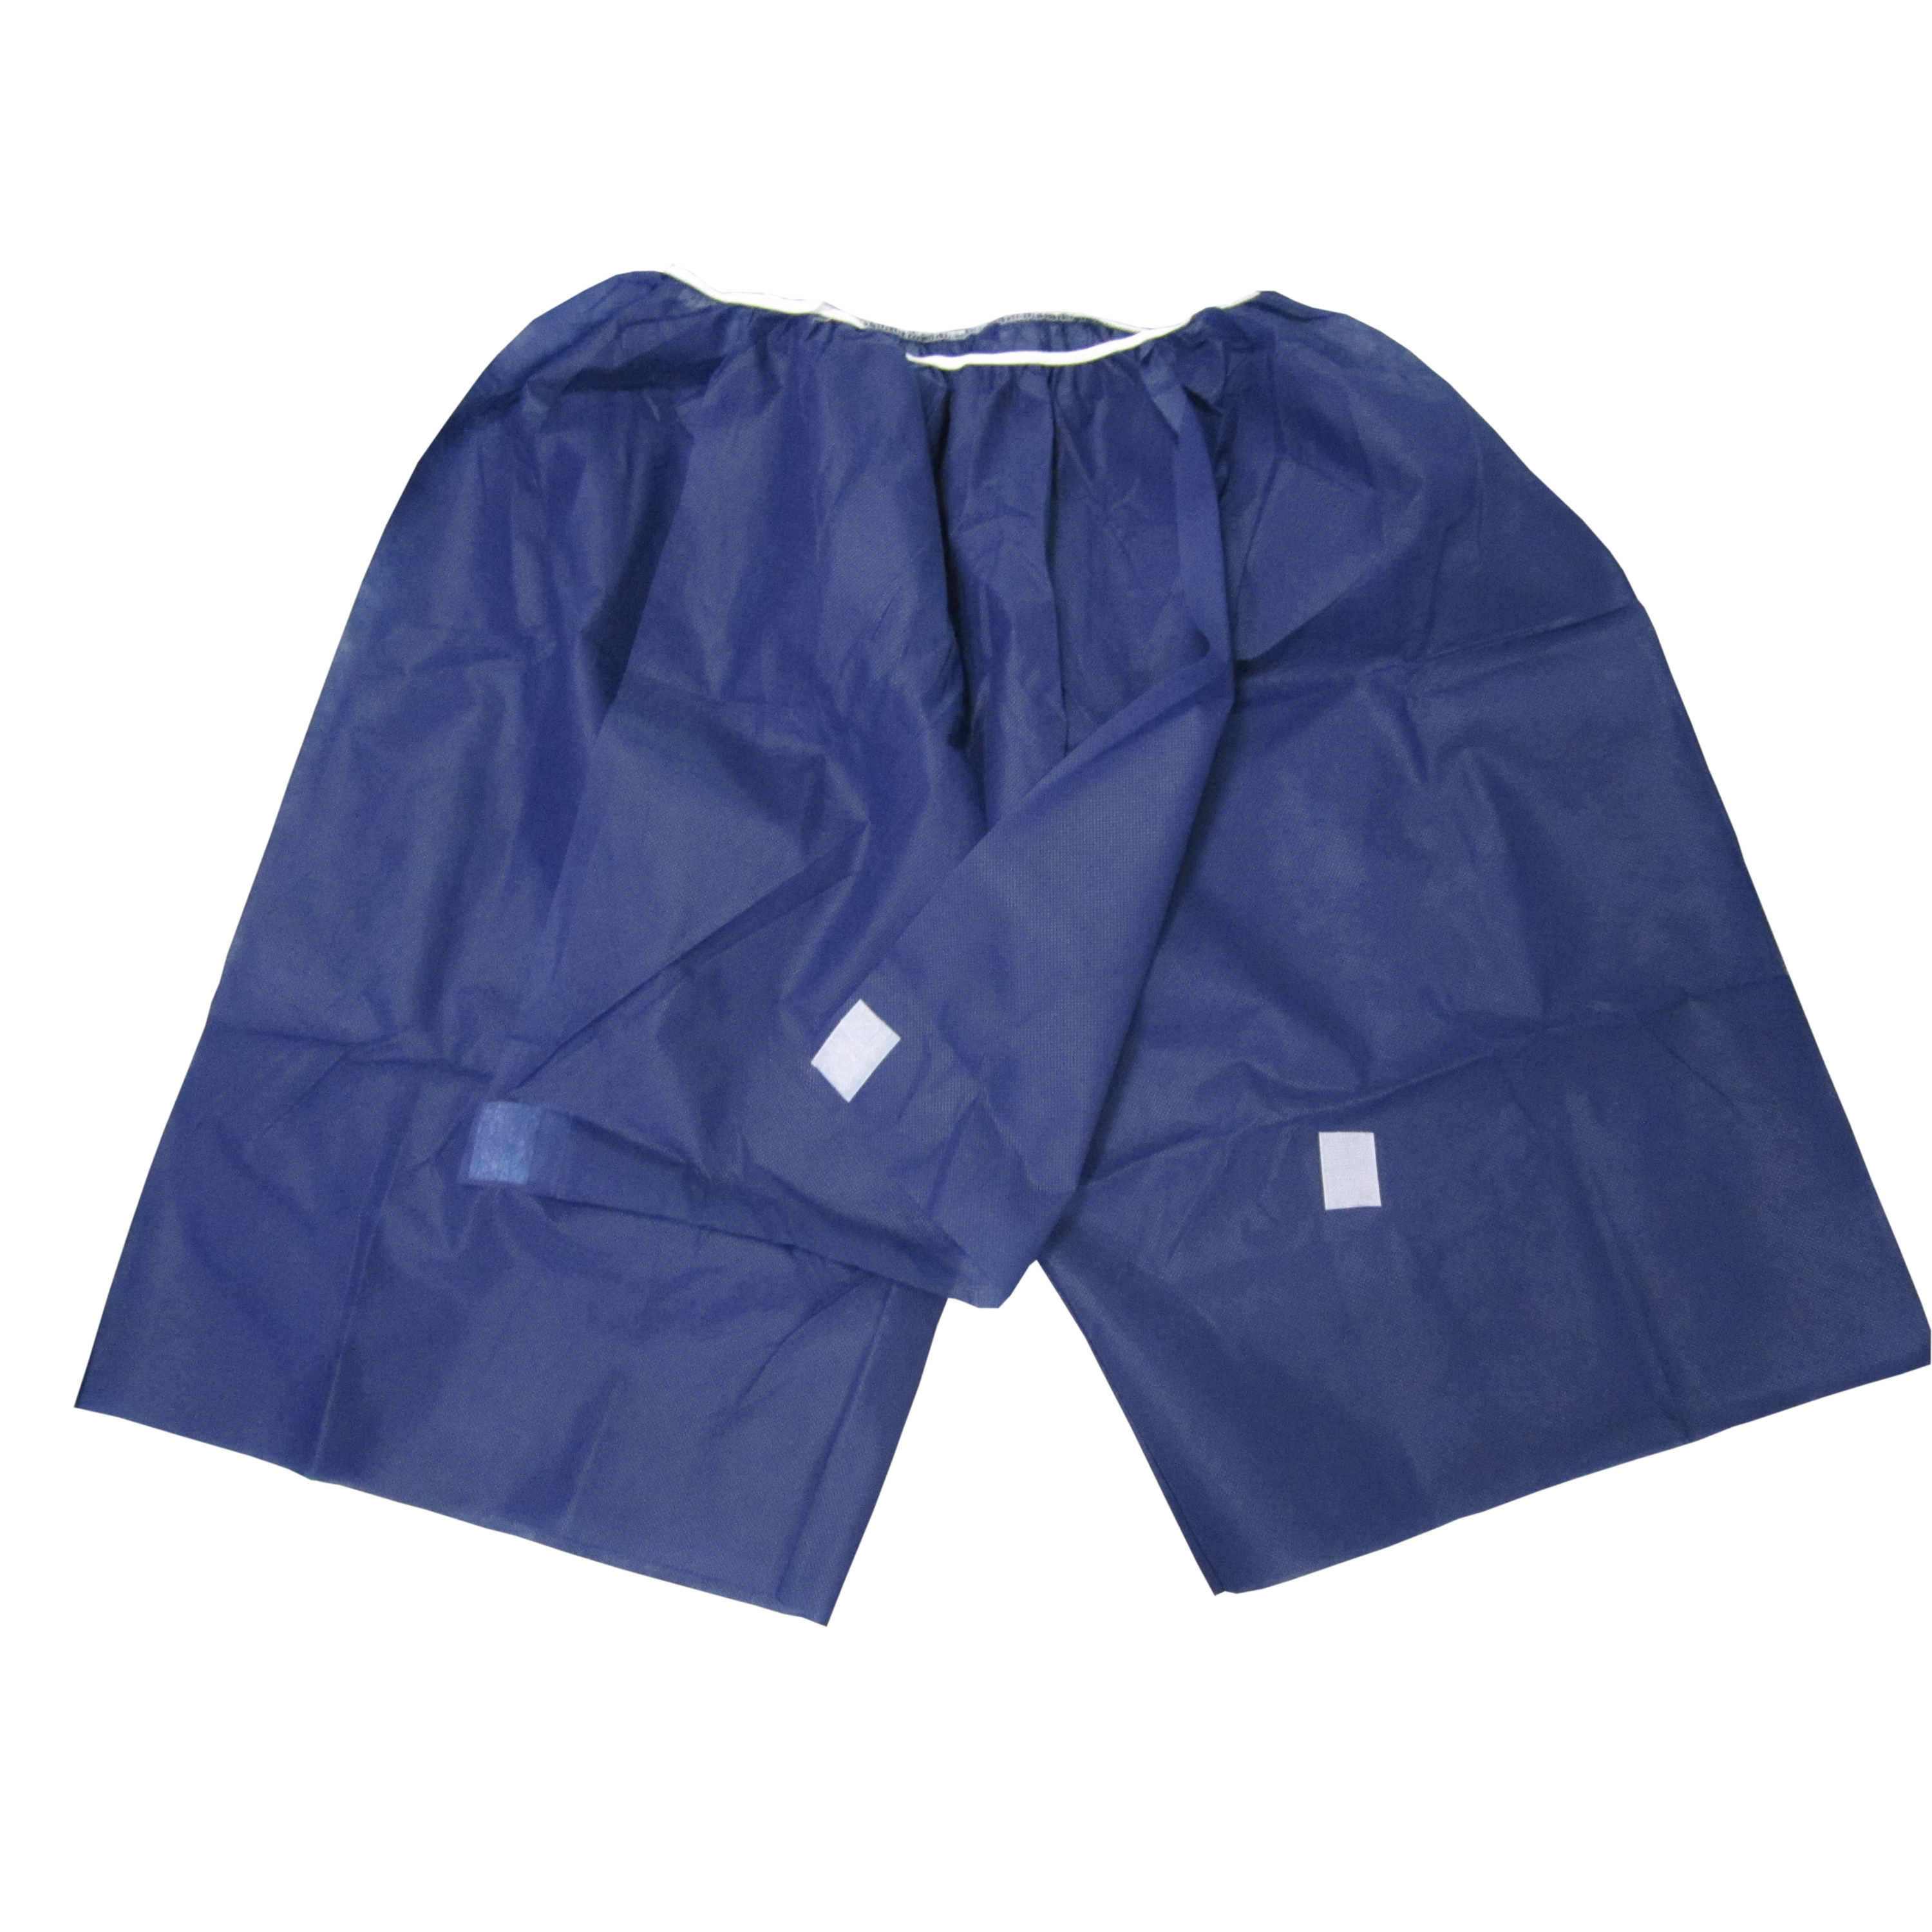 disposable underwear pp non woven Underpants Disposable men's short for massage hospital examination clinic